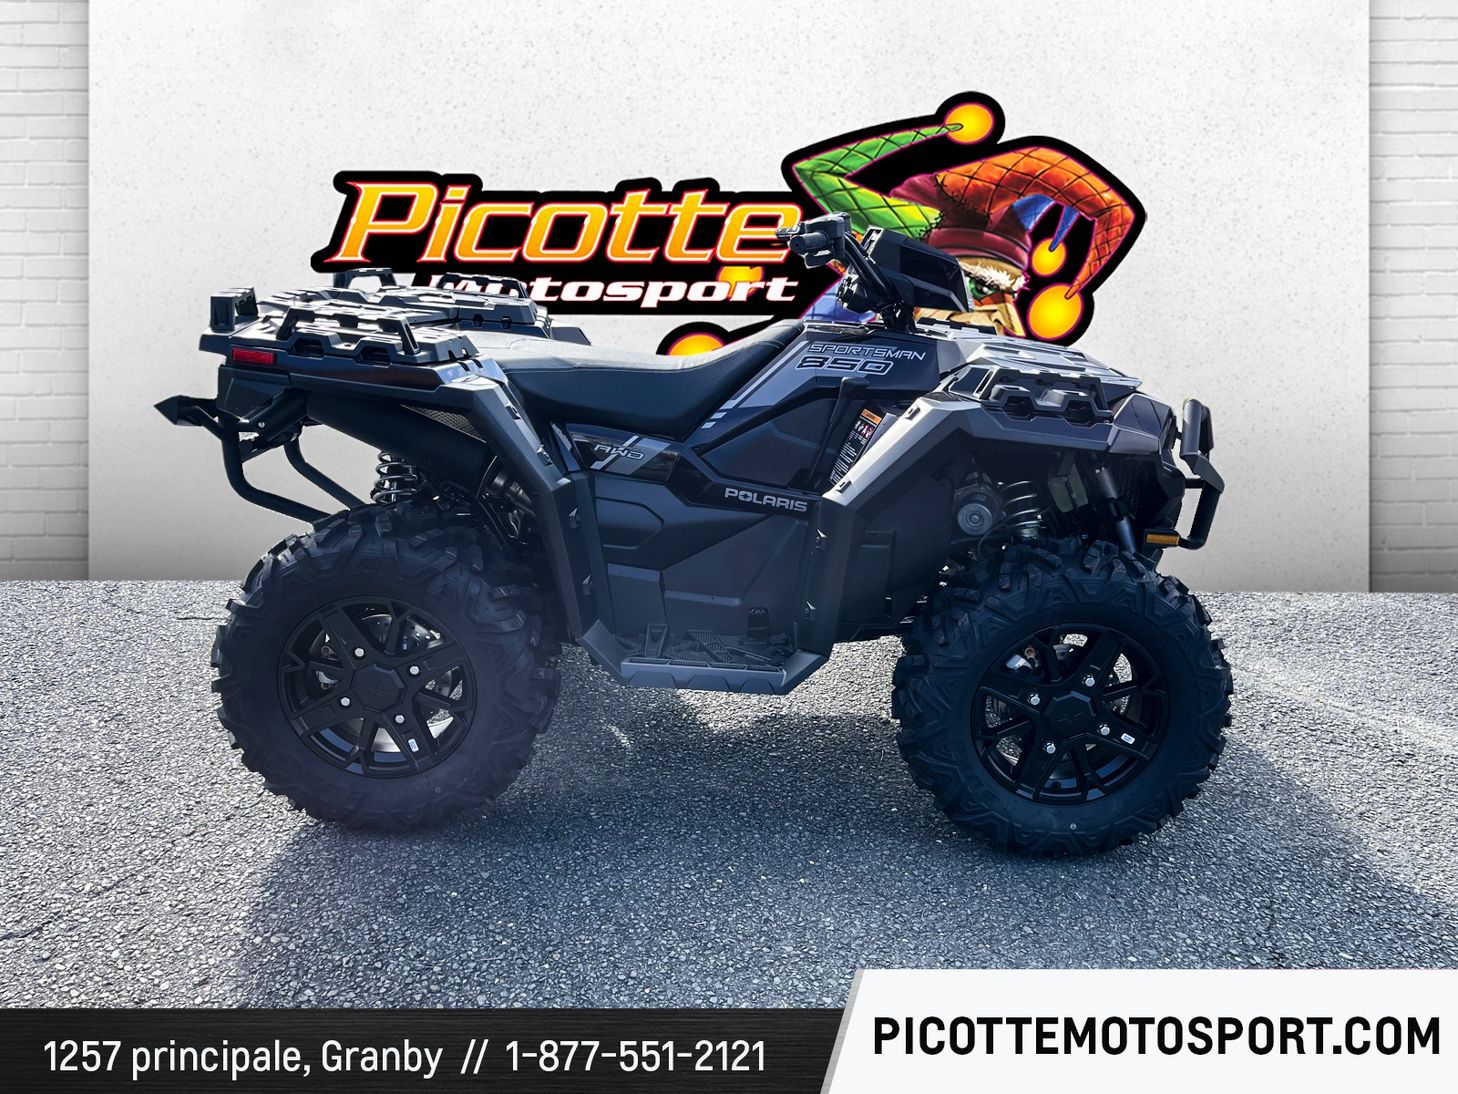 Picotte Motosport | Atv Polaris in our New inventory in Granby